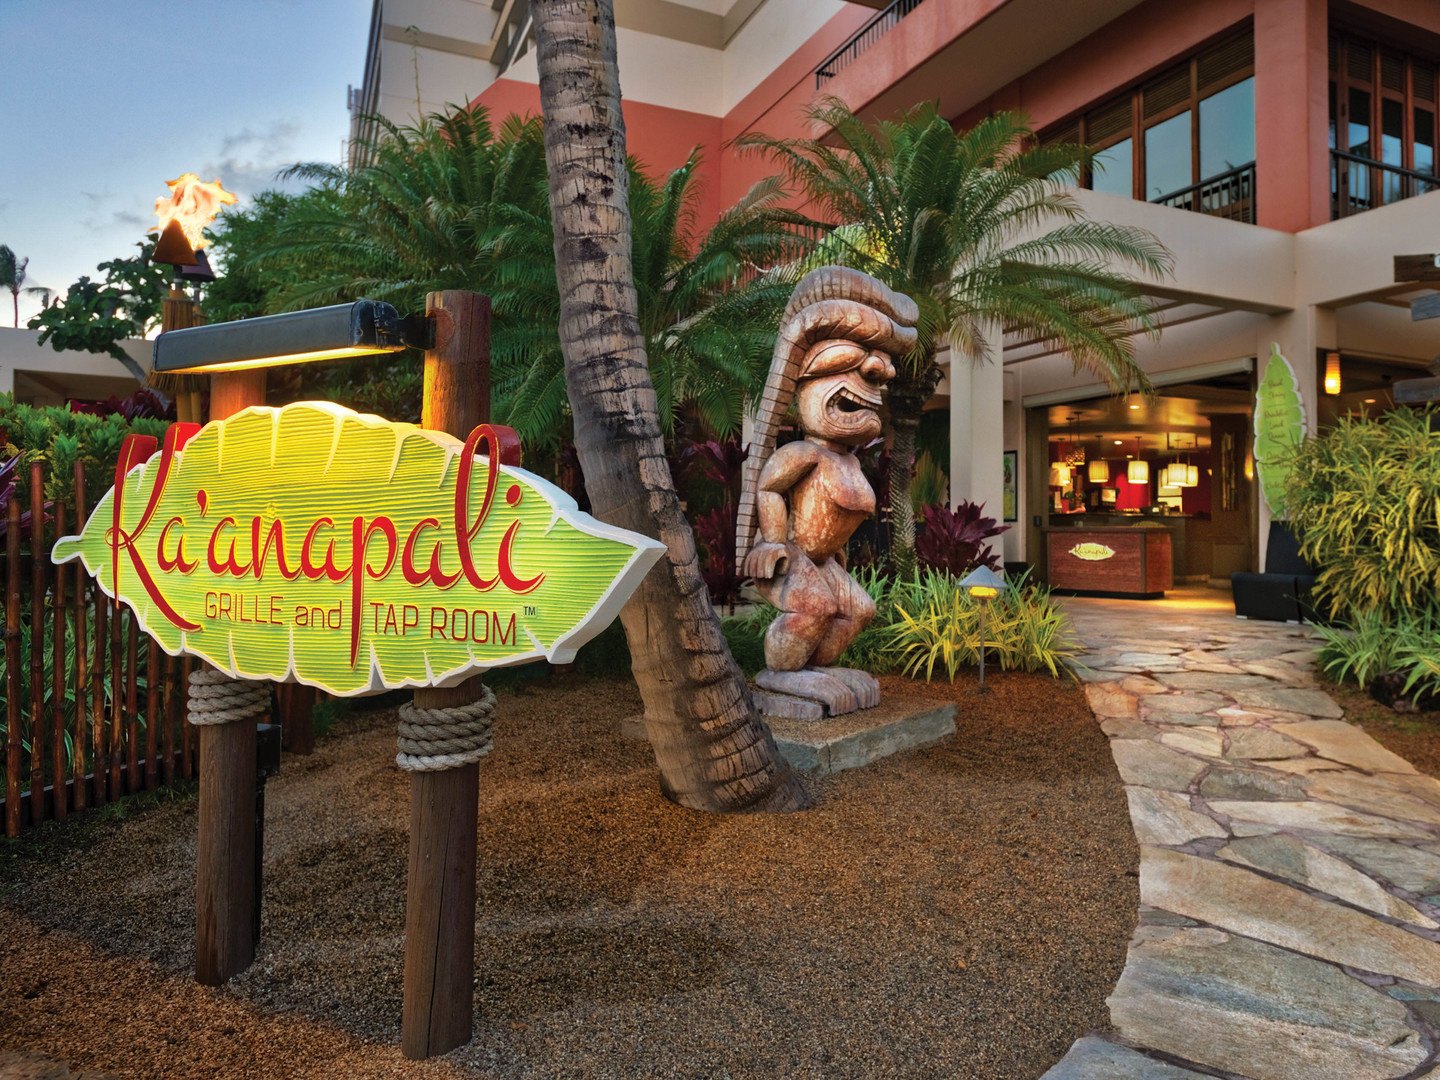 Marriott's Maui Ocean Club - Molokai, Maui, and Lanai Towers Kaanapali Grille Tap Room. Marriott's Maui Ocean Club - Molokai, Maui, and Lanai Towers is located in Lāhainā, Maui, Hawai‘i United States.